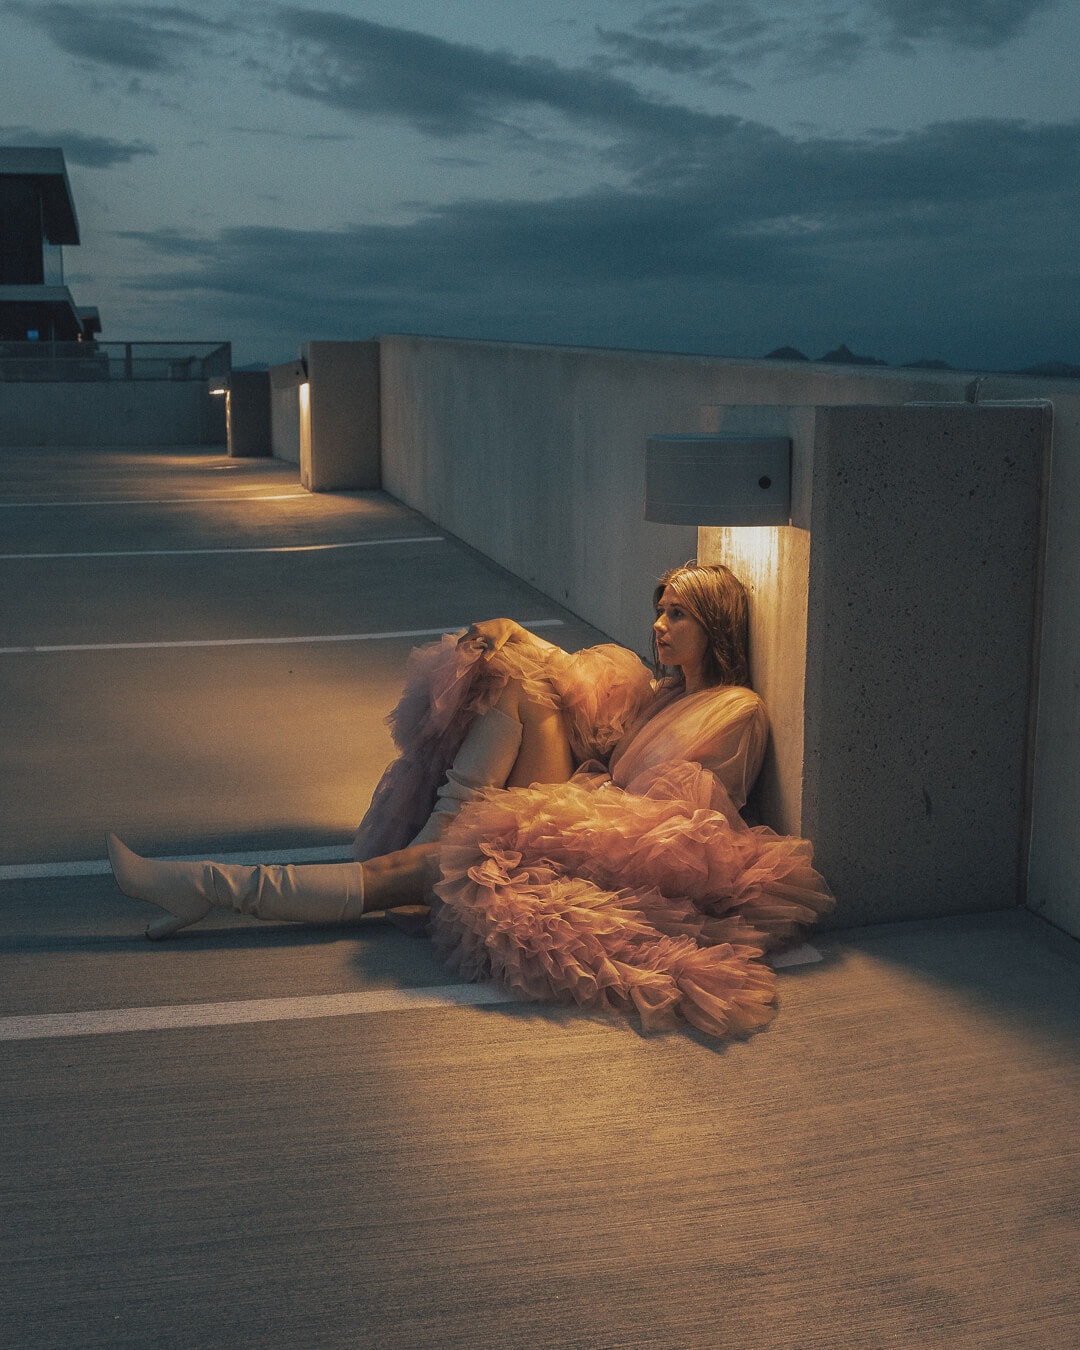 girl sitting in a Scottsdale Quarter parking garage in a pink dress